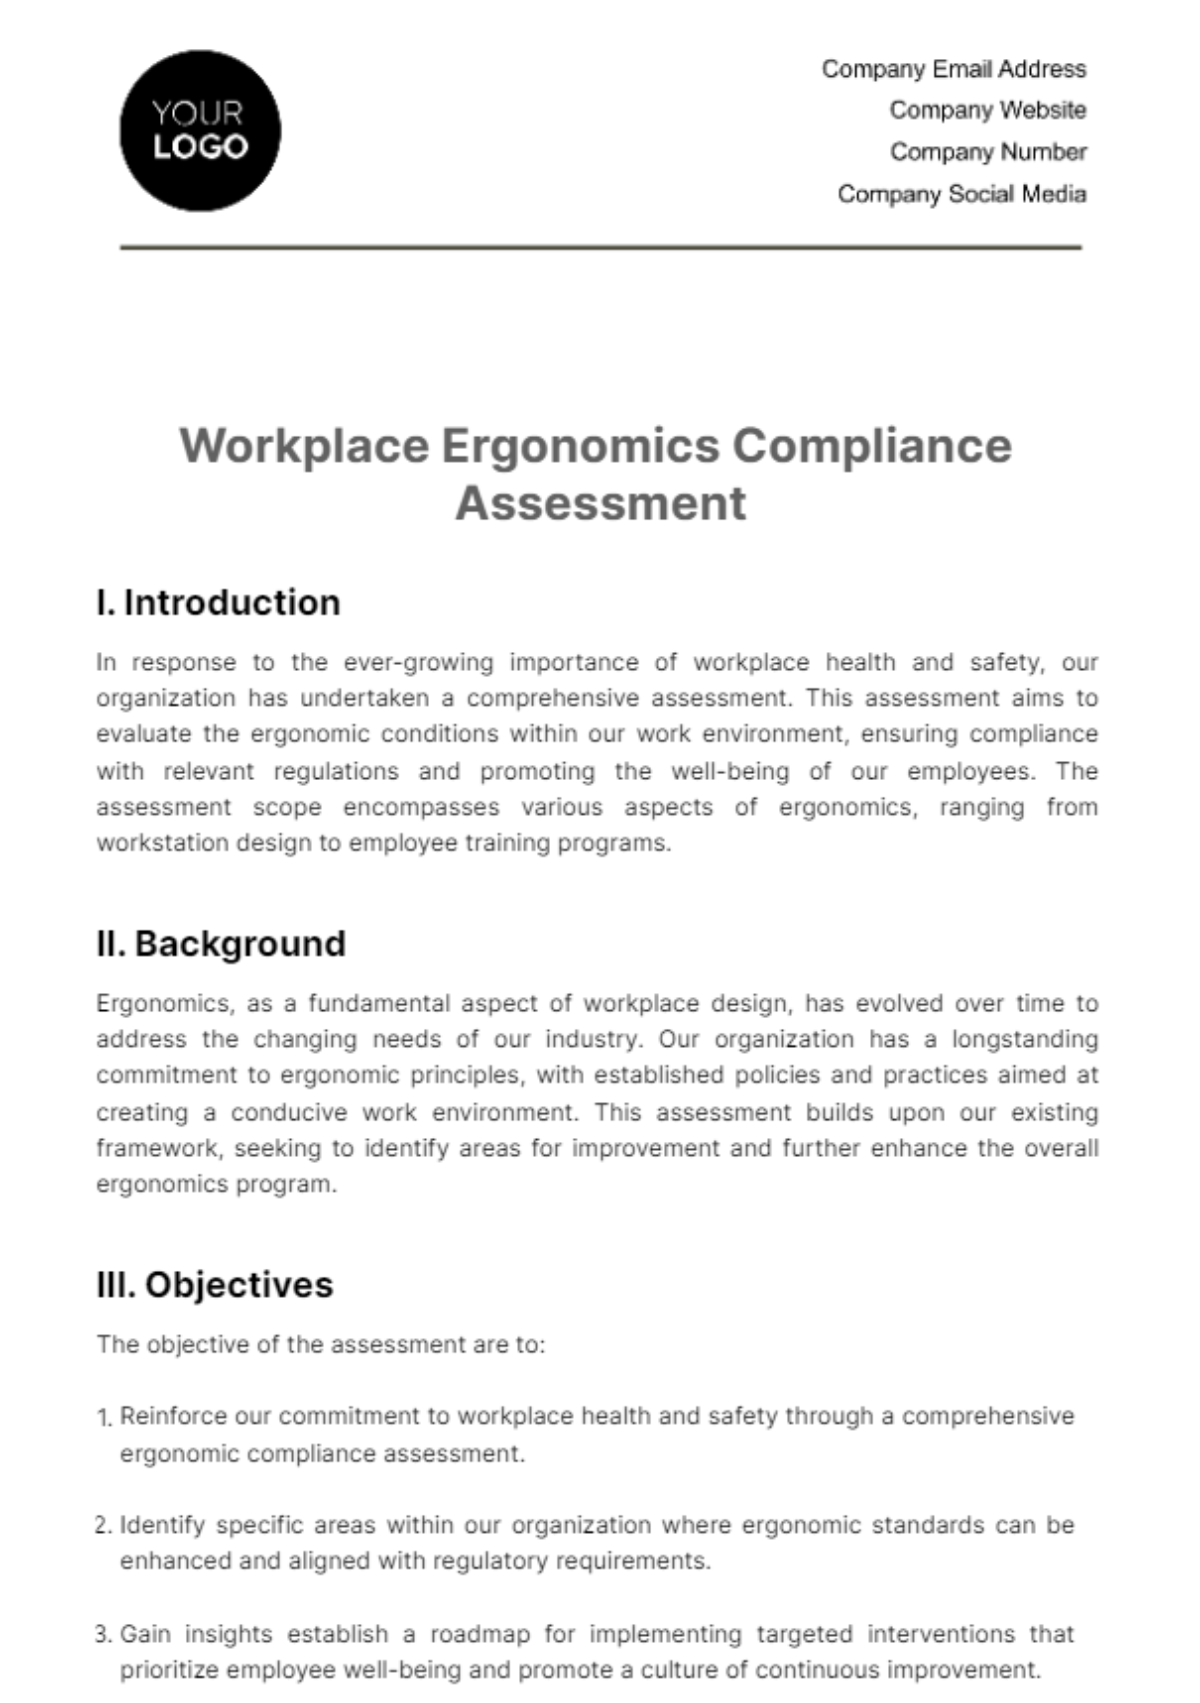 Workplace Ergonomics Compliance Assessment Template